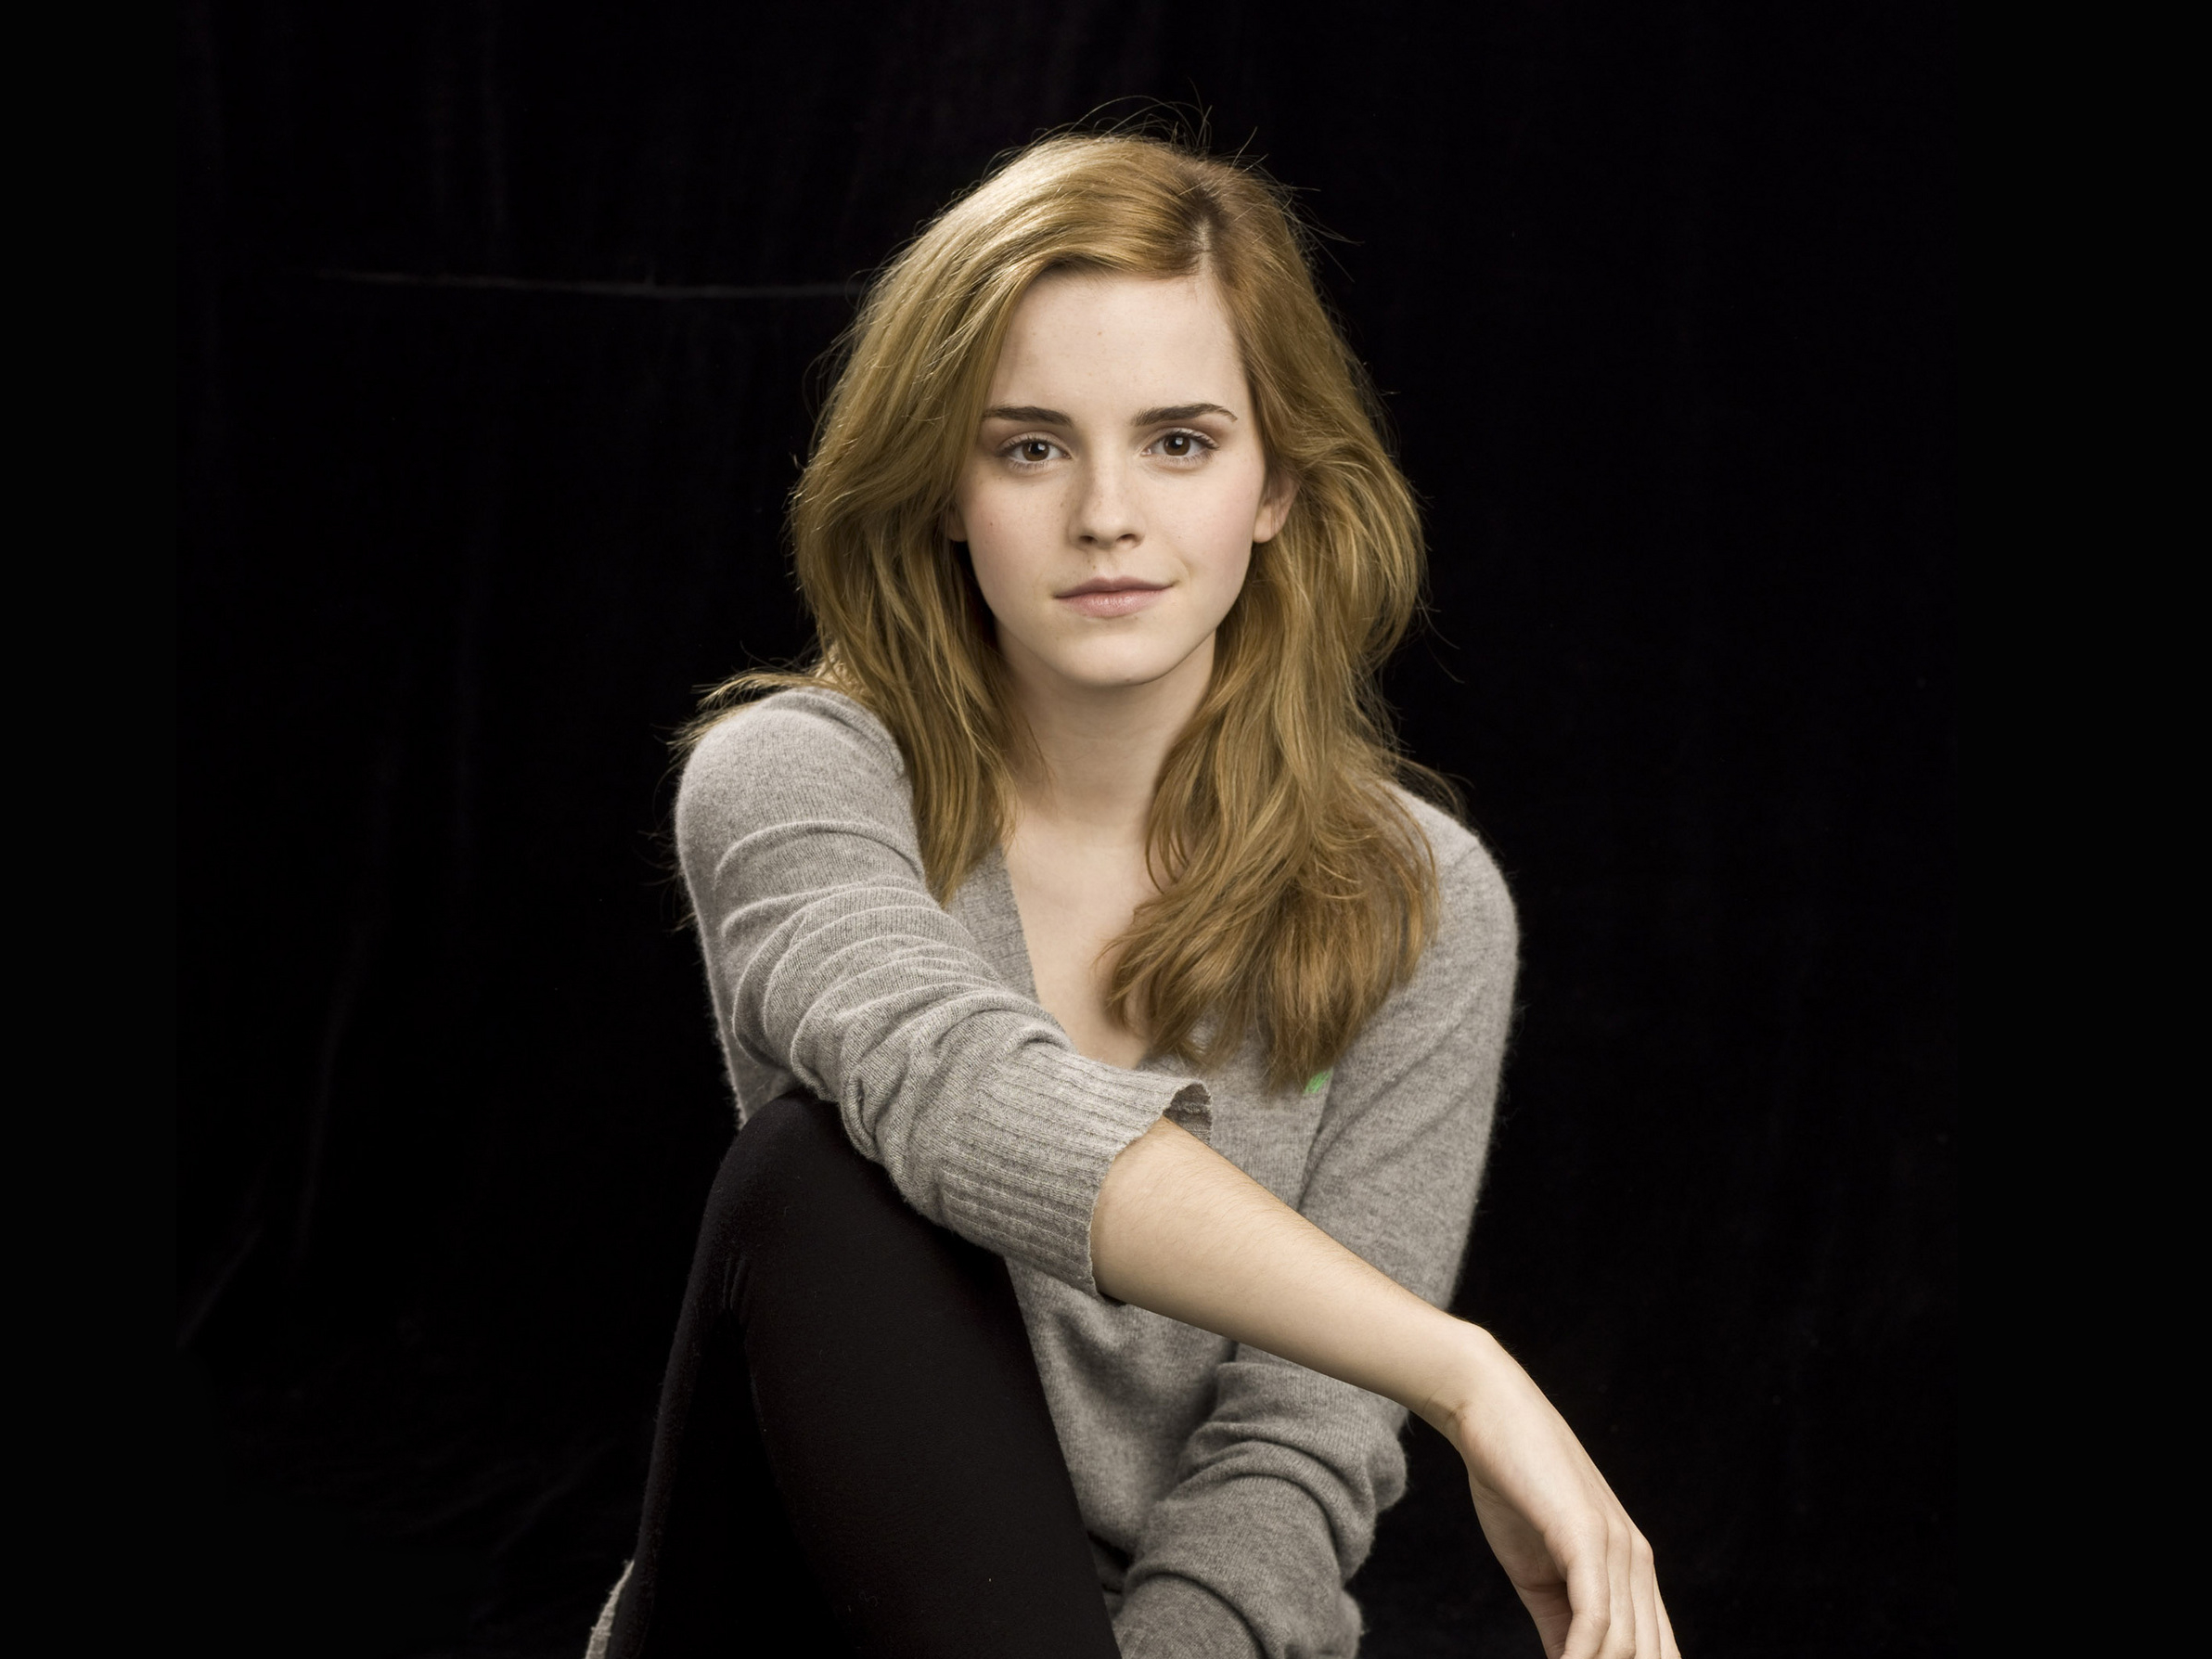 Emma Watson Full HD Wallpaper And Background